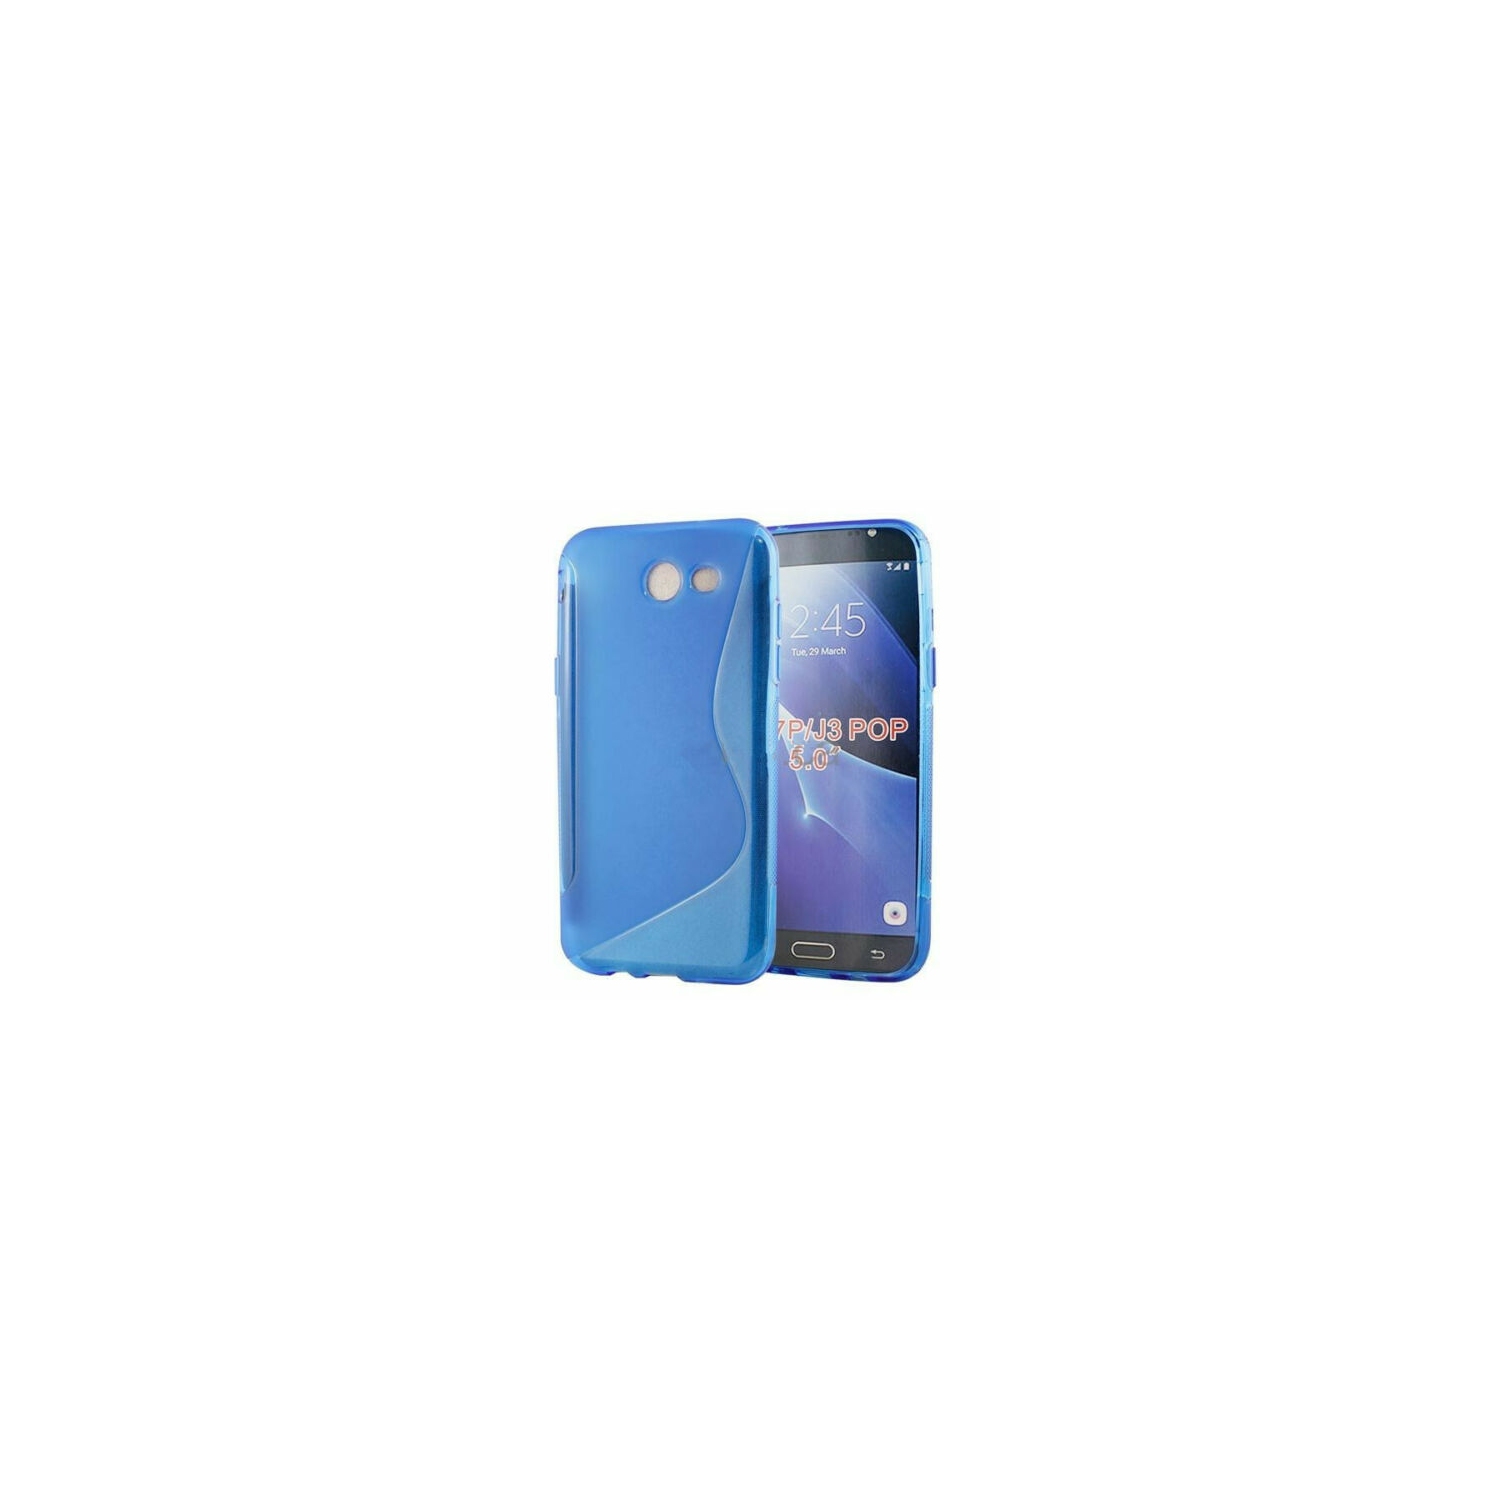 【CSmart】 Ultra Thin Soft TPU Silicone Jelly Bumper Back Cover Case for Samsung Galaxy J3 Prime / J3 2017, Blue